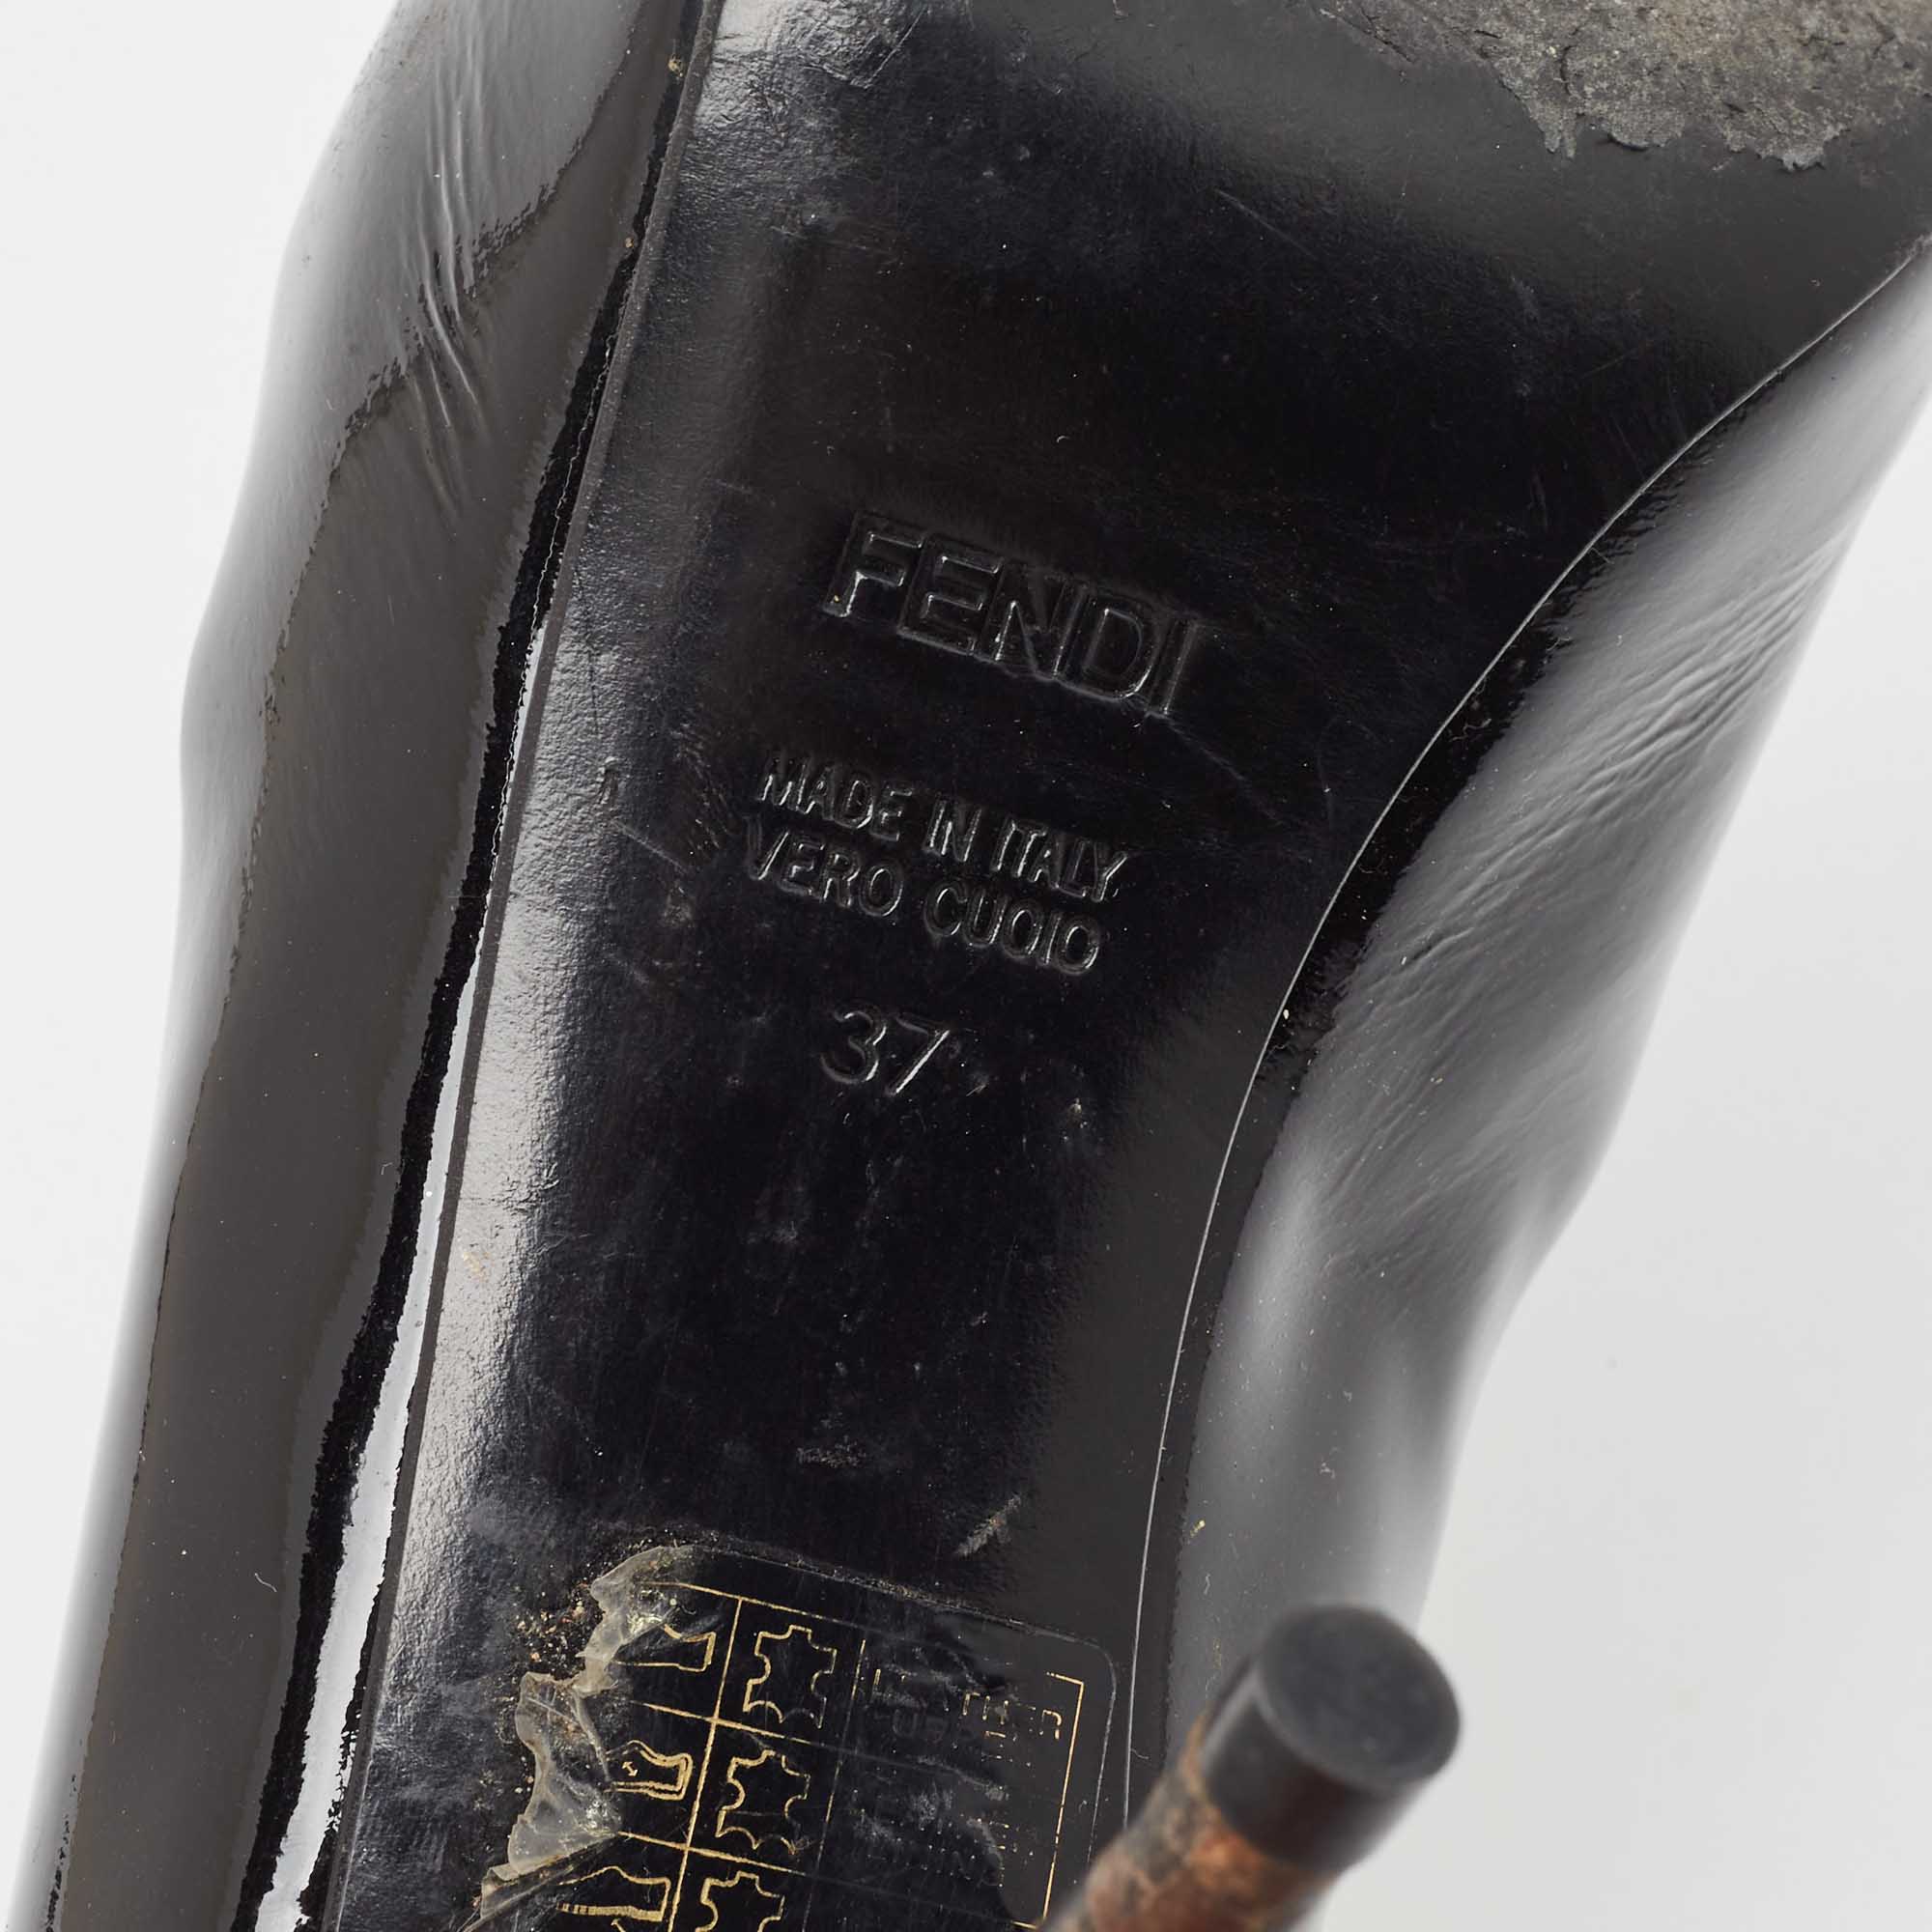 Fendi Black Patent Leather Zucca Heel Peep Toe Pumps Size 37